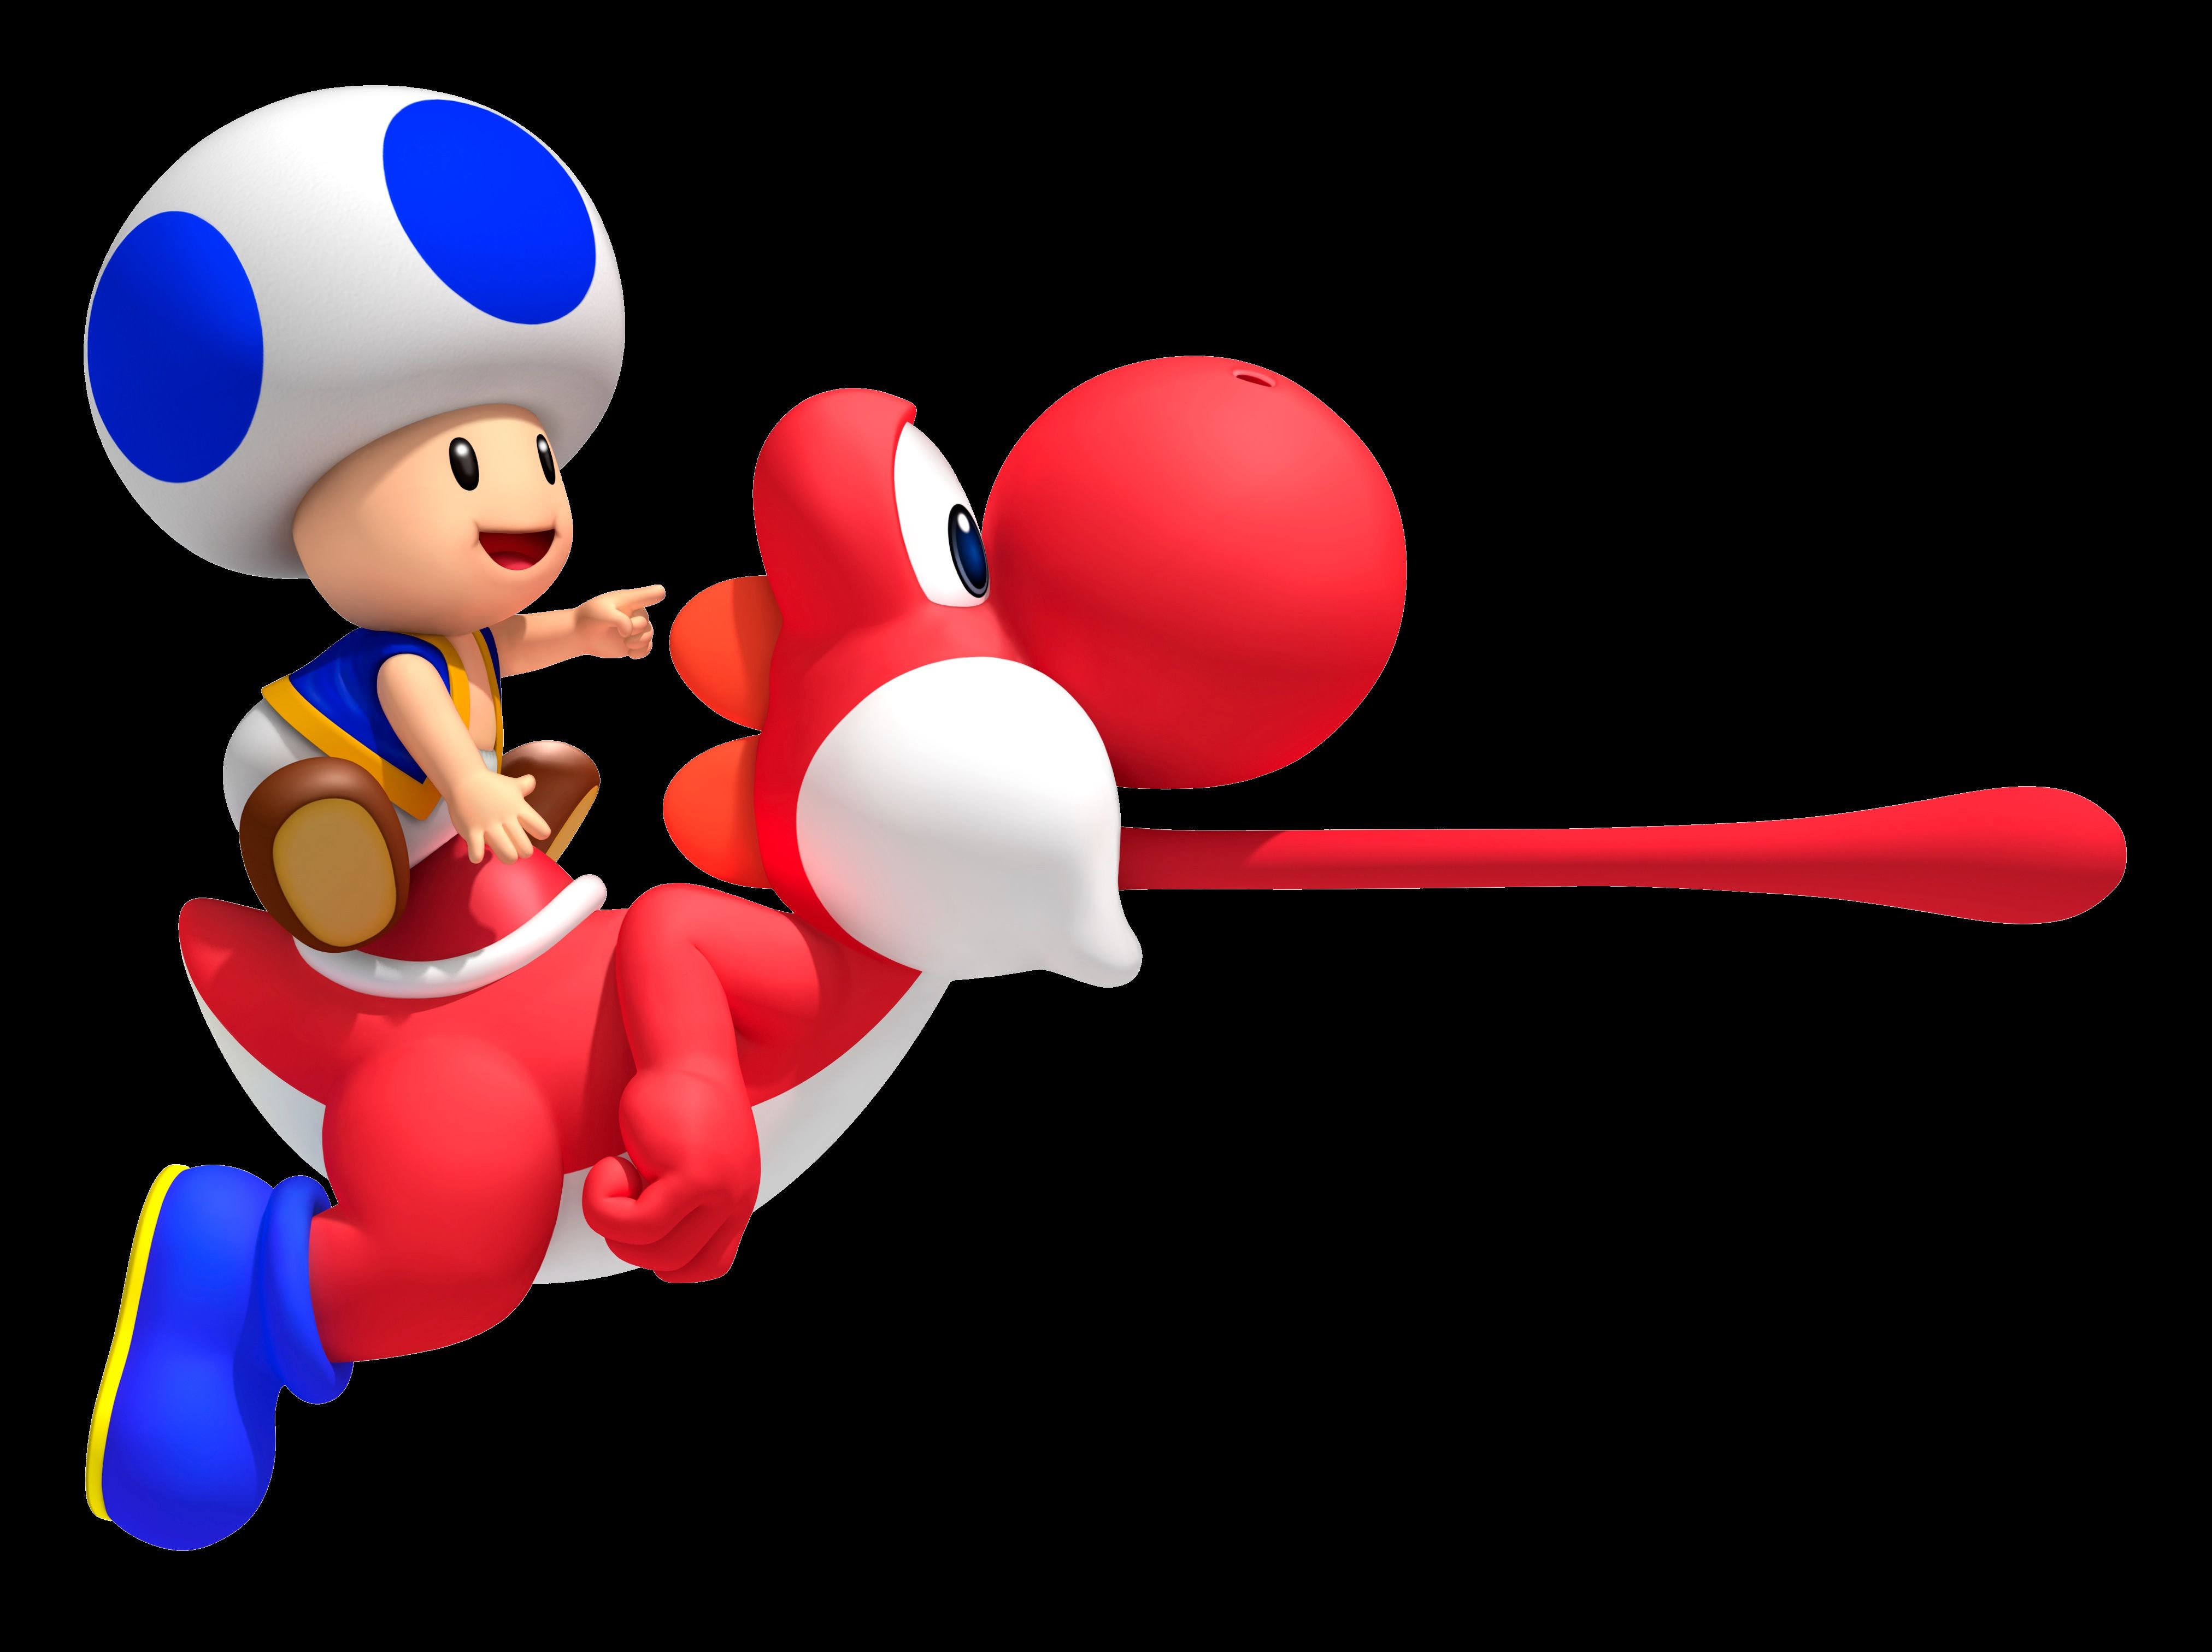 Toad (Mario), New Super Mario Bros Wii, Luigi, Yoshi, Mario, Video Game, 366551 download the picture for free. - Super Mario